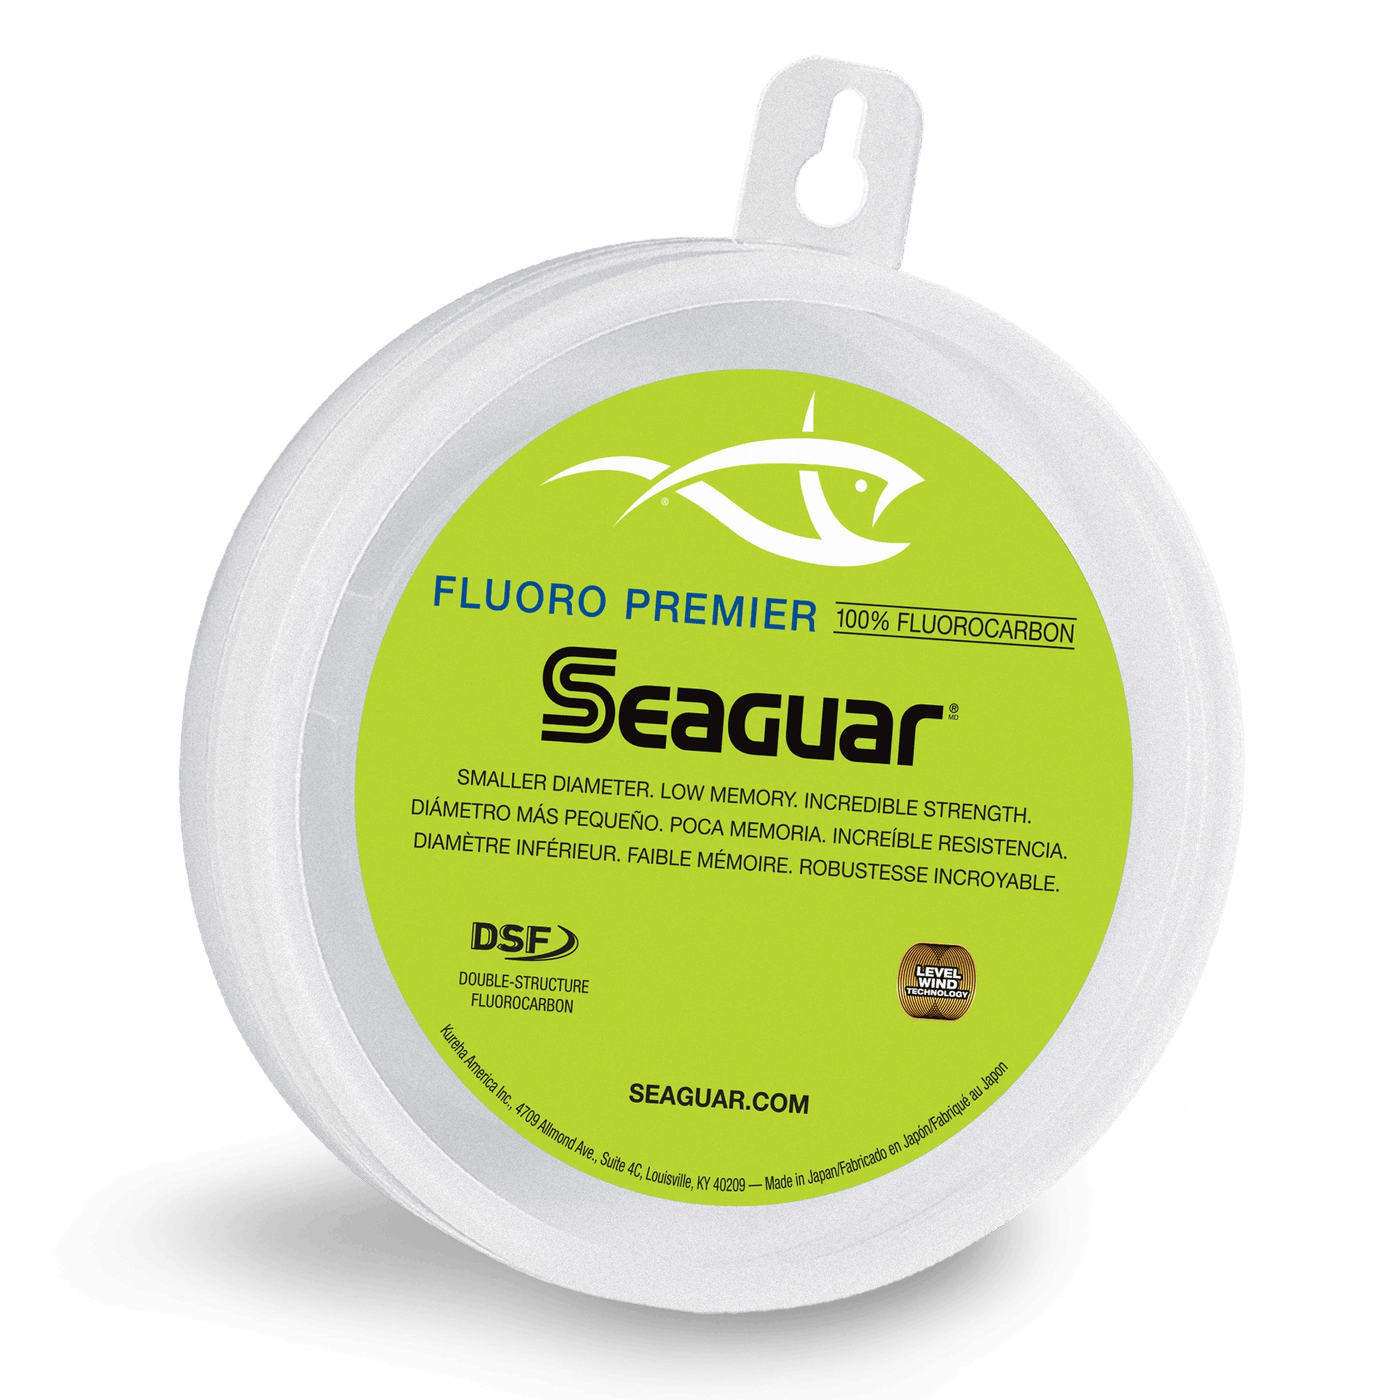 Seaguar - Fluoro Premier Fluorocarbon Leader Fishing Line Seaguar 